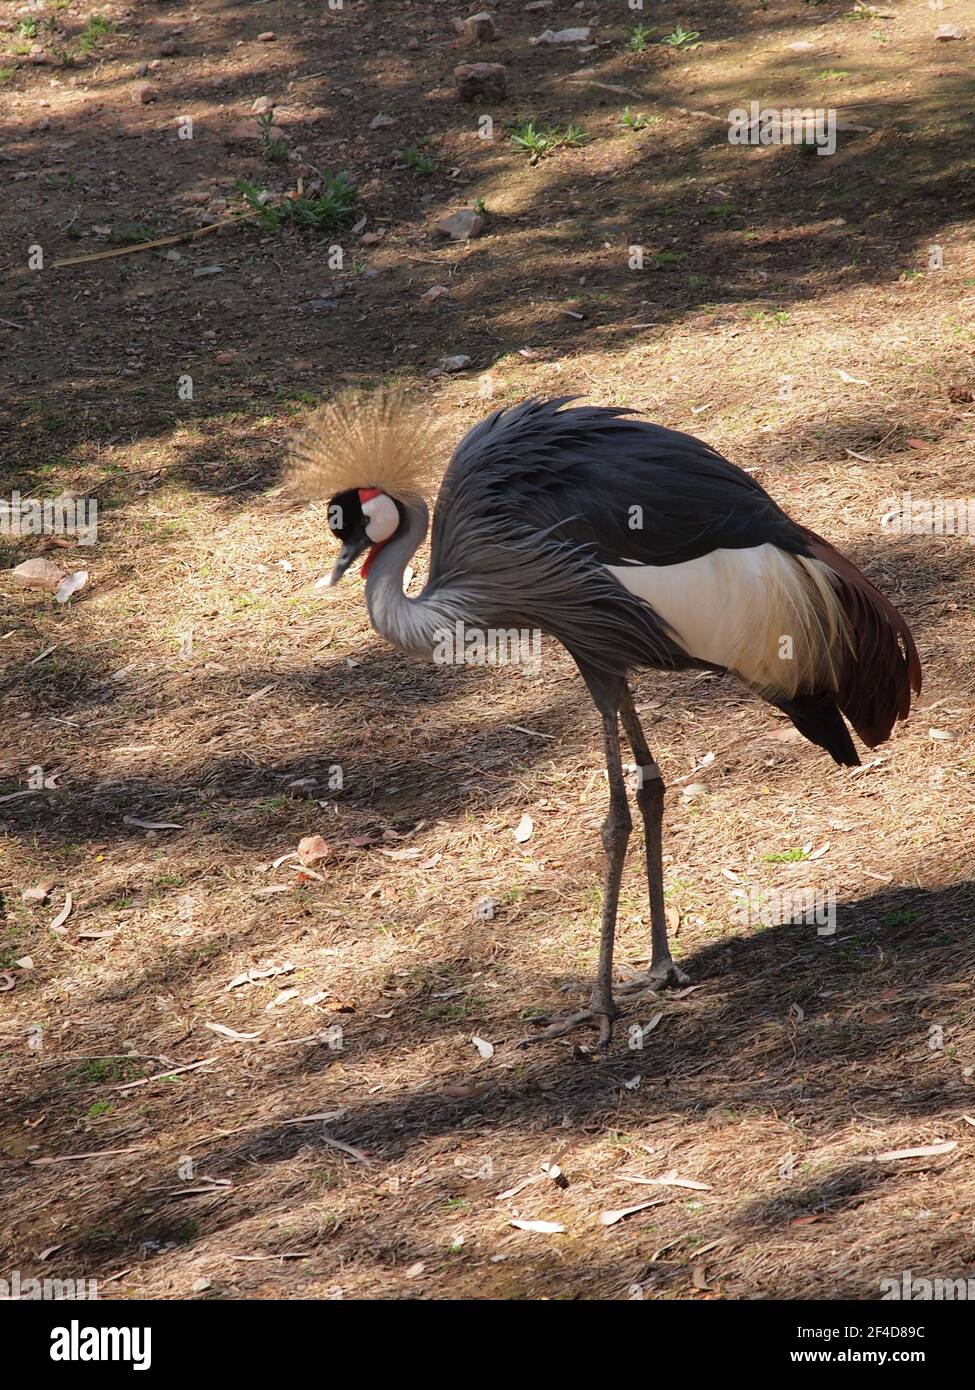 Black crowned crane at the Phoenix, Arizona zoo. The scientific name is Balearica pavonina. Stock Photo